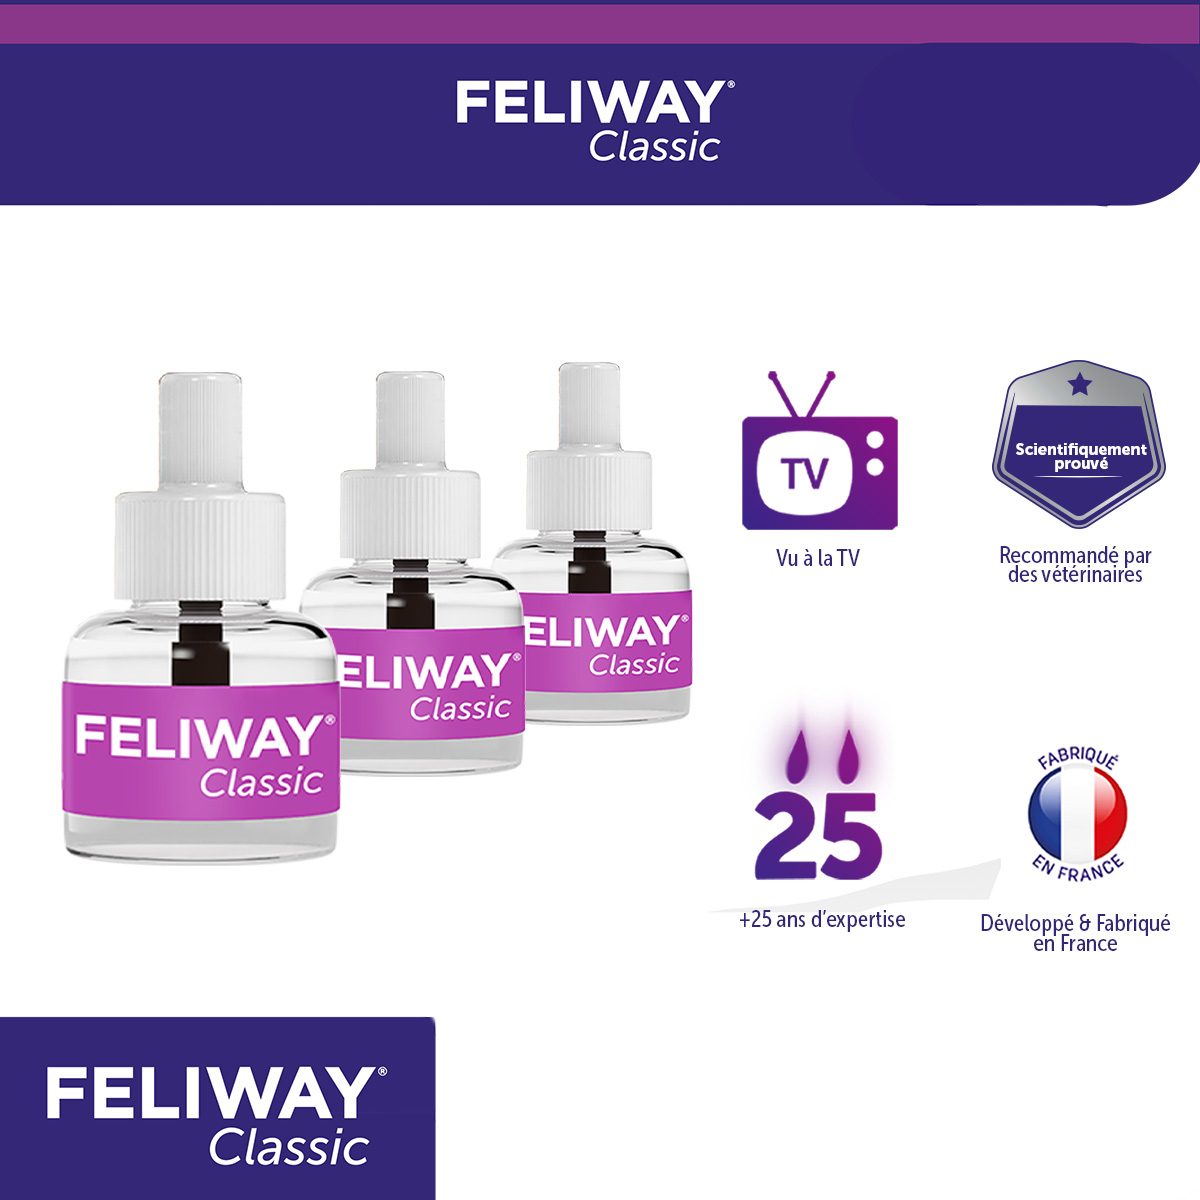 Pack de 3 recharges diffuseur Feliway Classic 